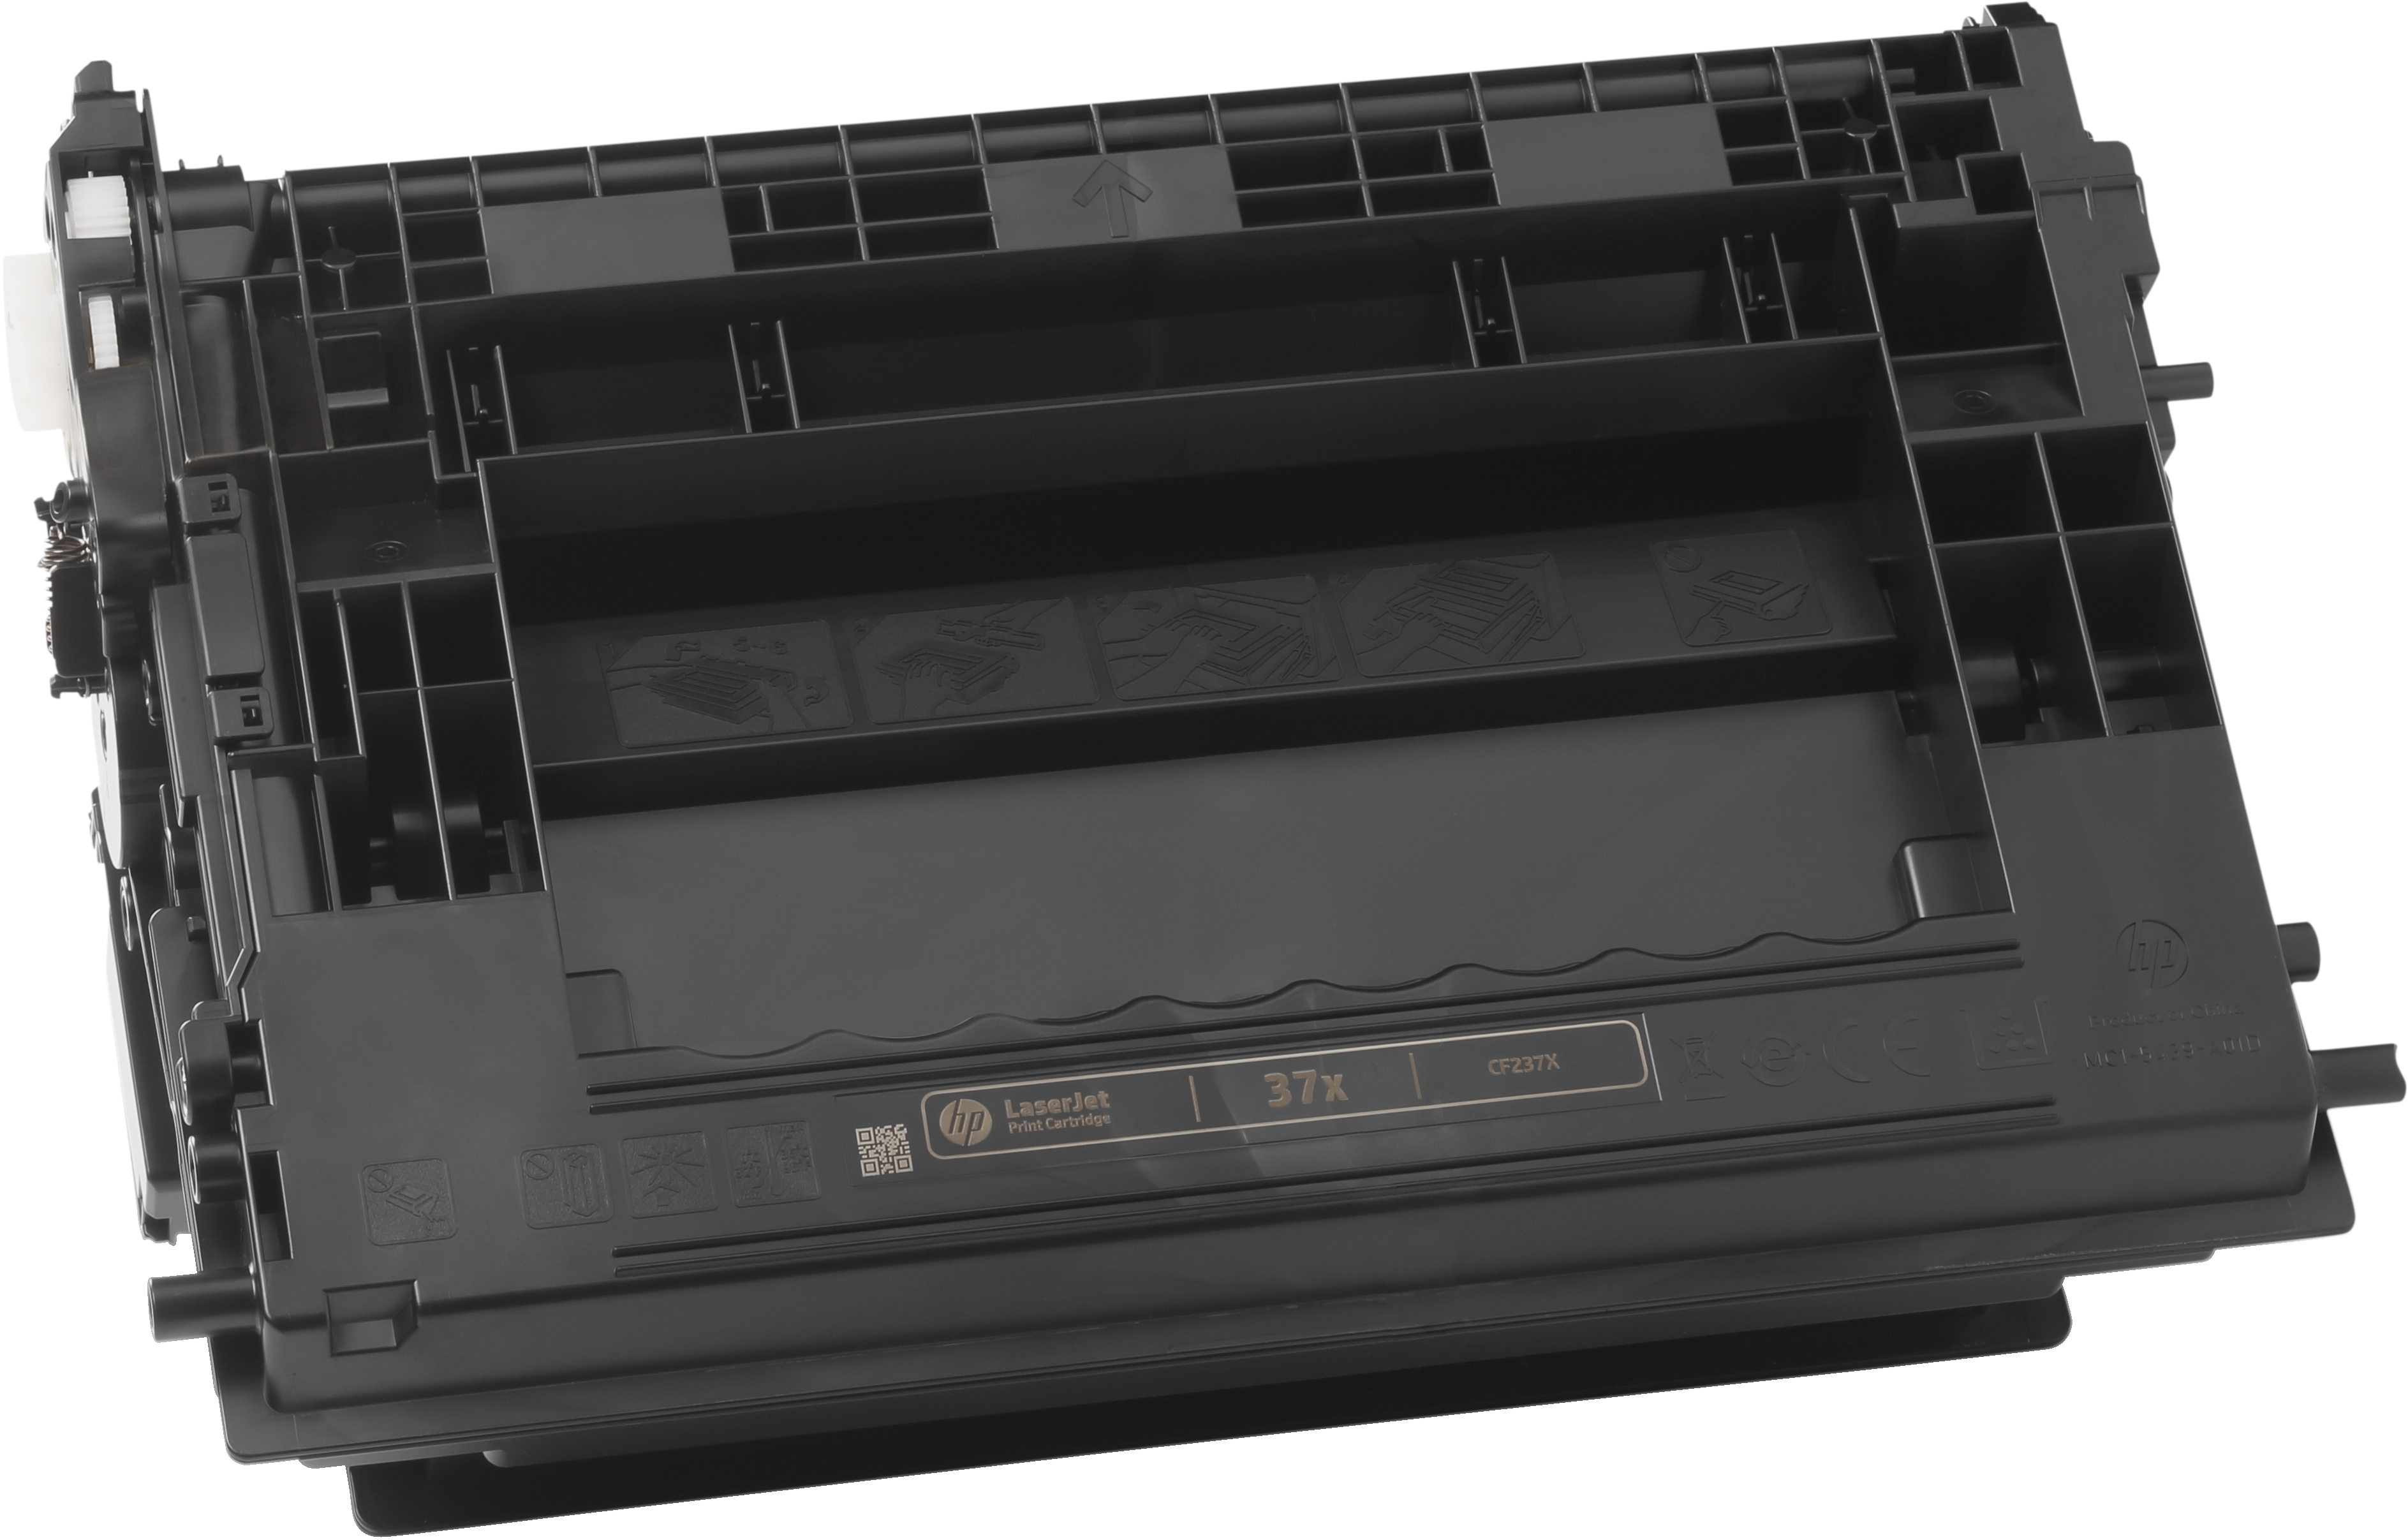 HP LaserJet 37X - Tonereinheit Original - Schwarz - 25.000 Seiten